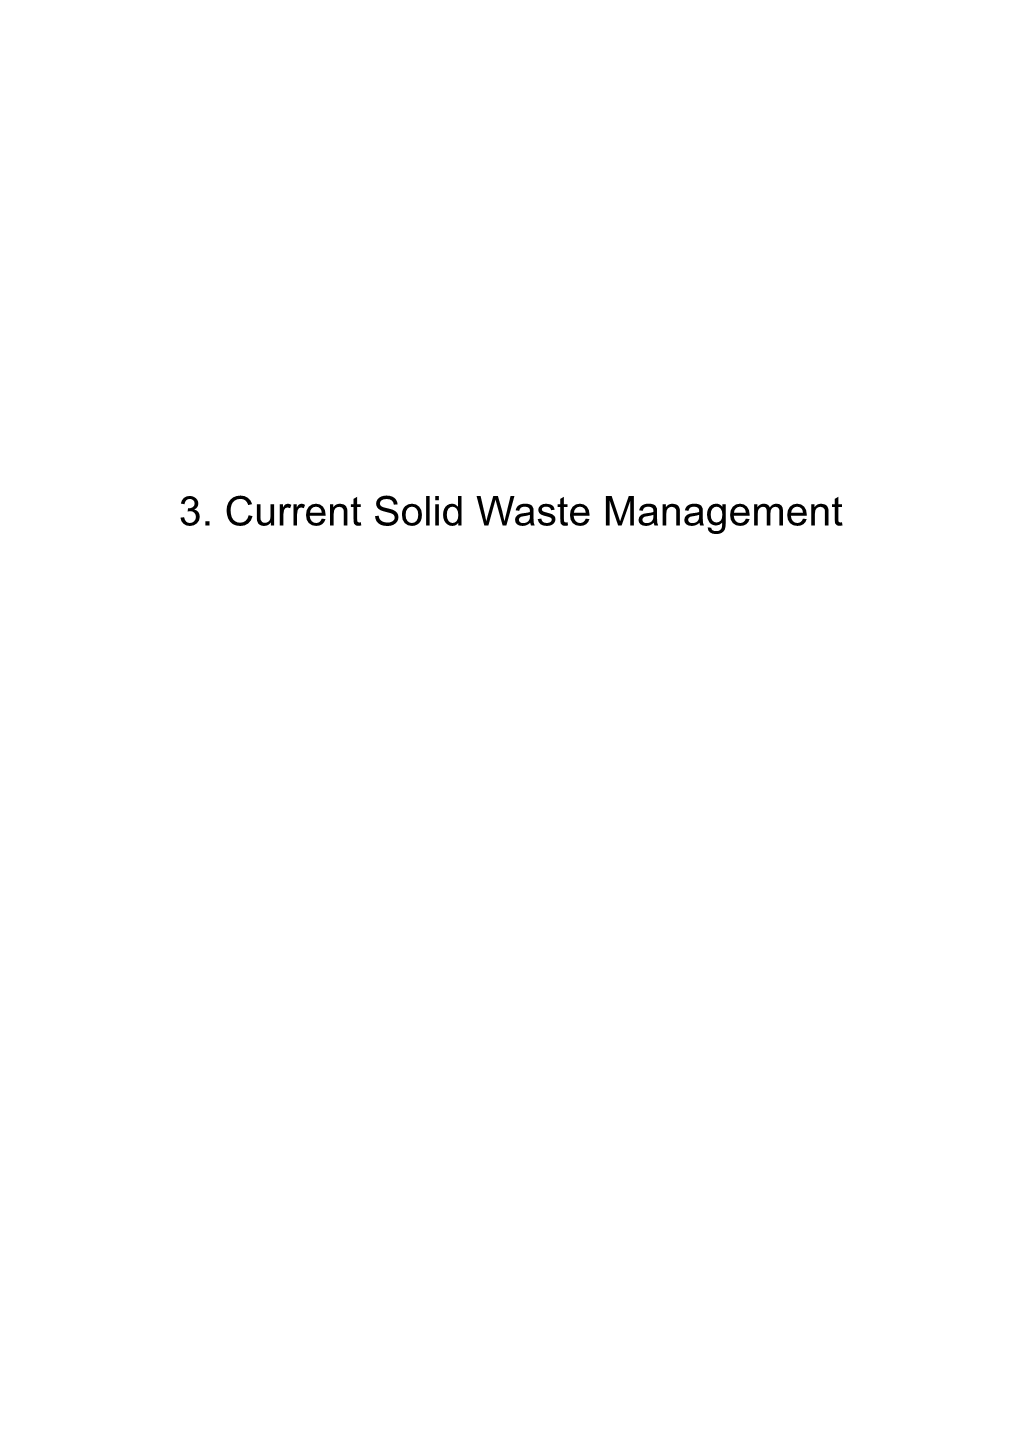 3. Current Solid Waste Management the Study on Solid Waste Management Plan for Ulaanbaatar City in Mongolia JICA 3.1 Current Waste Stream KOKUSAI KOGYO CO., LTD